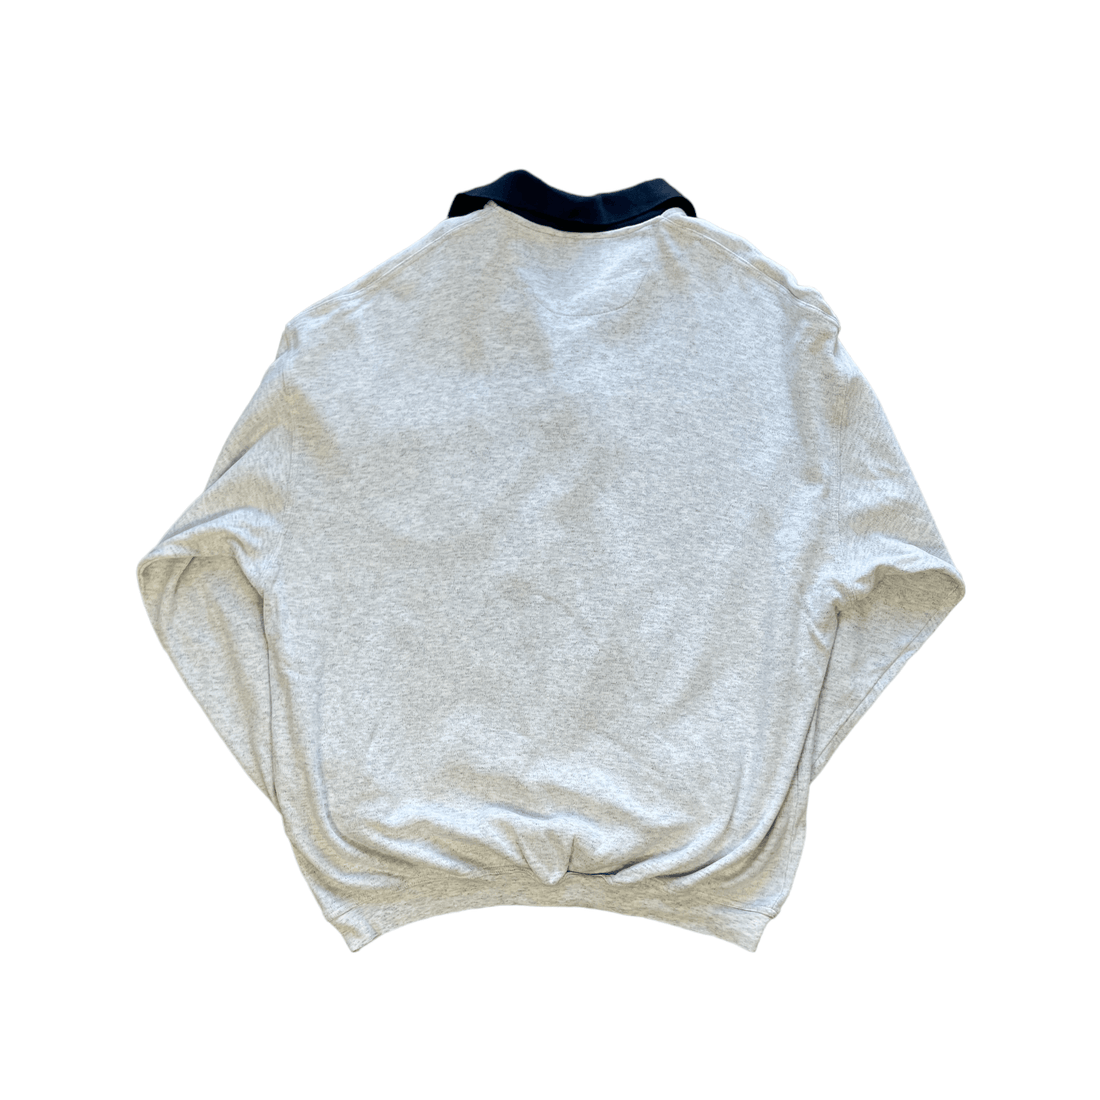 Vintage 90s Grey Yves Saint Laurent (YSL) Sweatshirt - Extra Large - The Streetwear Studio